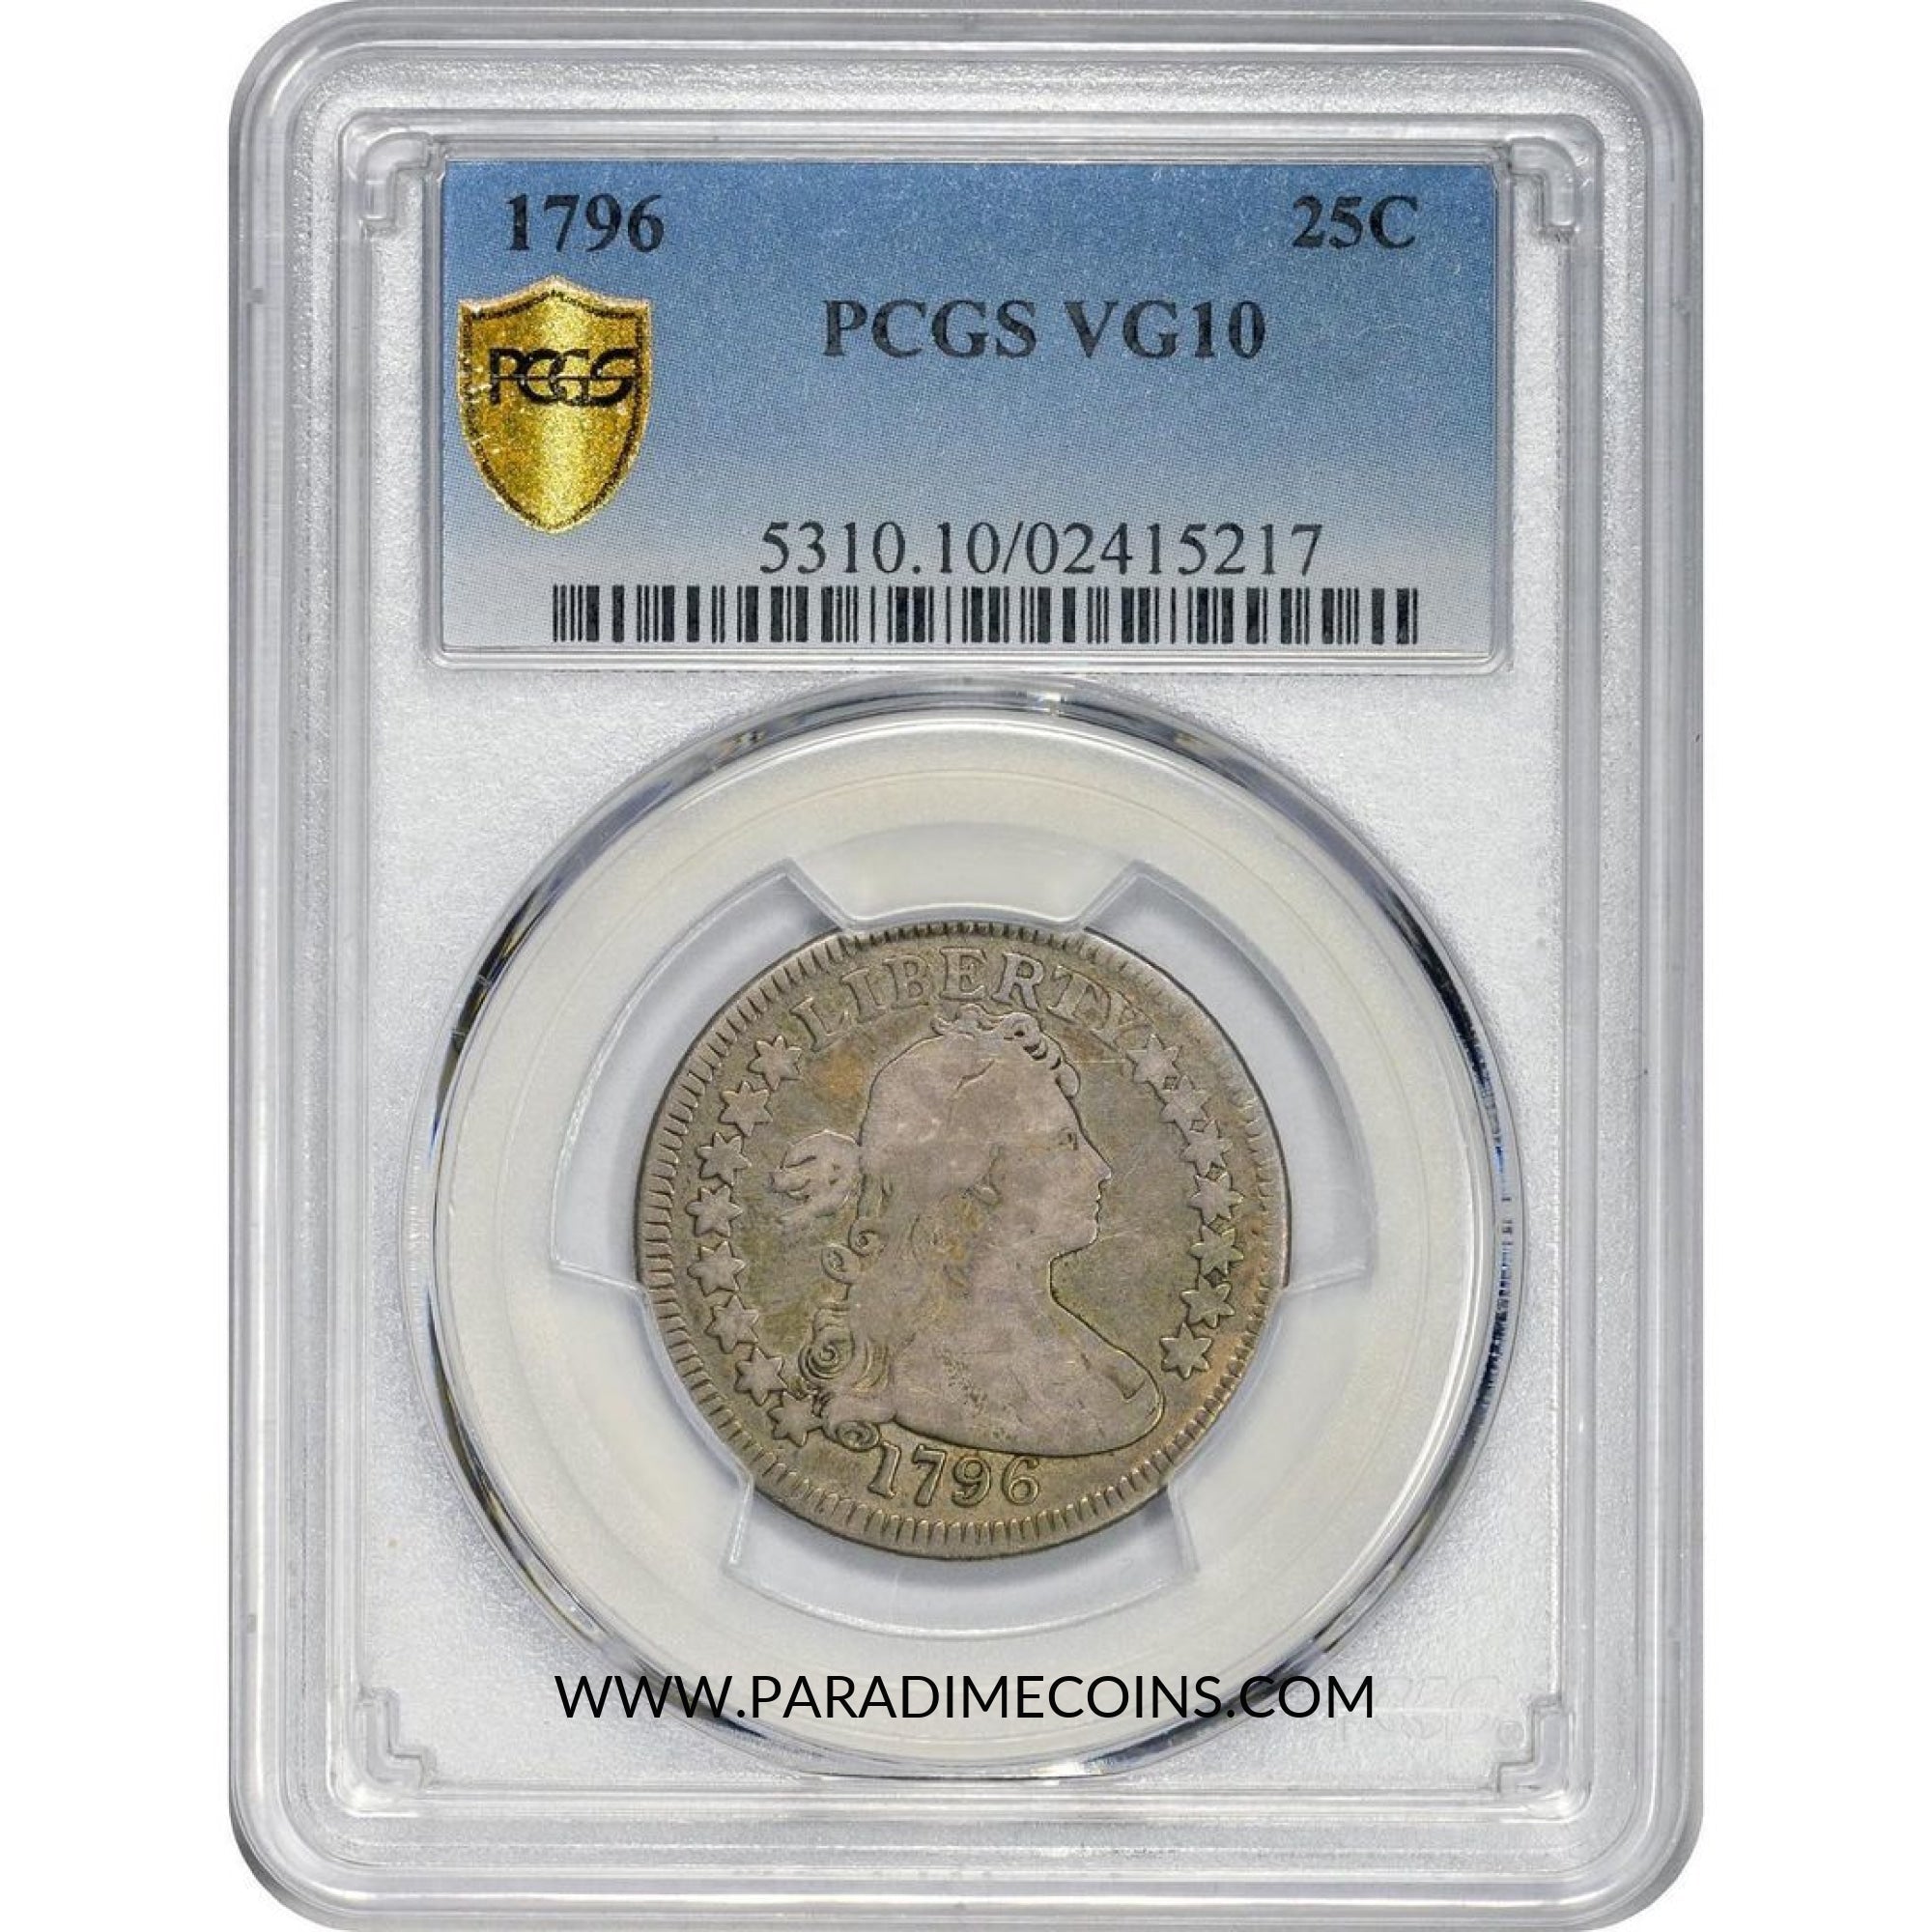 1796 25C VG10 PCGS - Paradime Coins | PCGS NGC CACG CAC Rare US Numismatic Coins For Sale